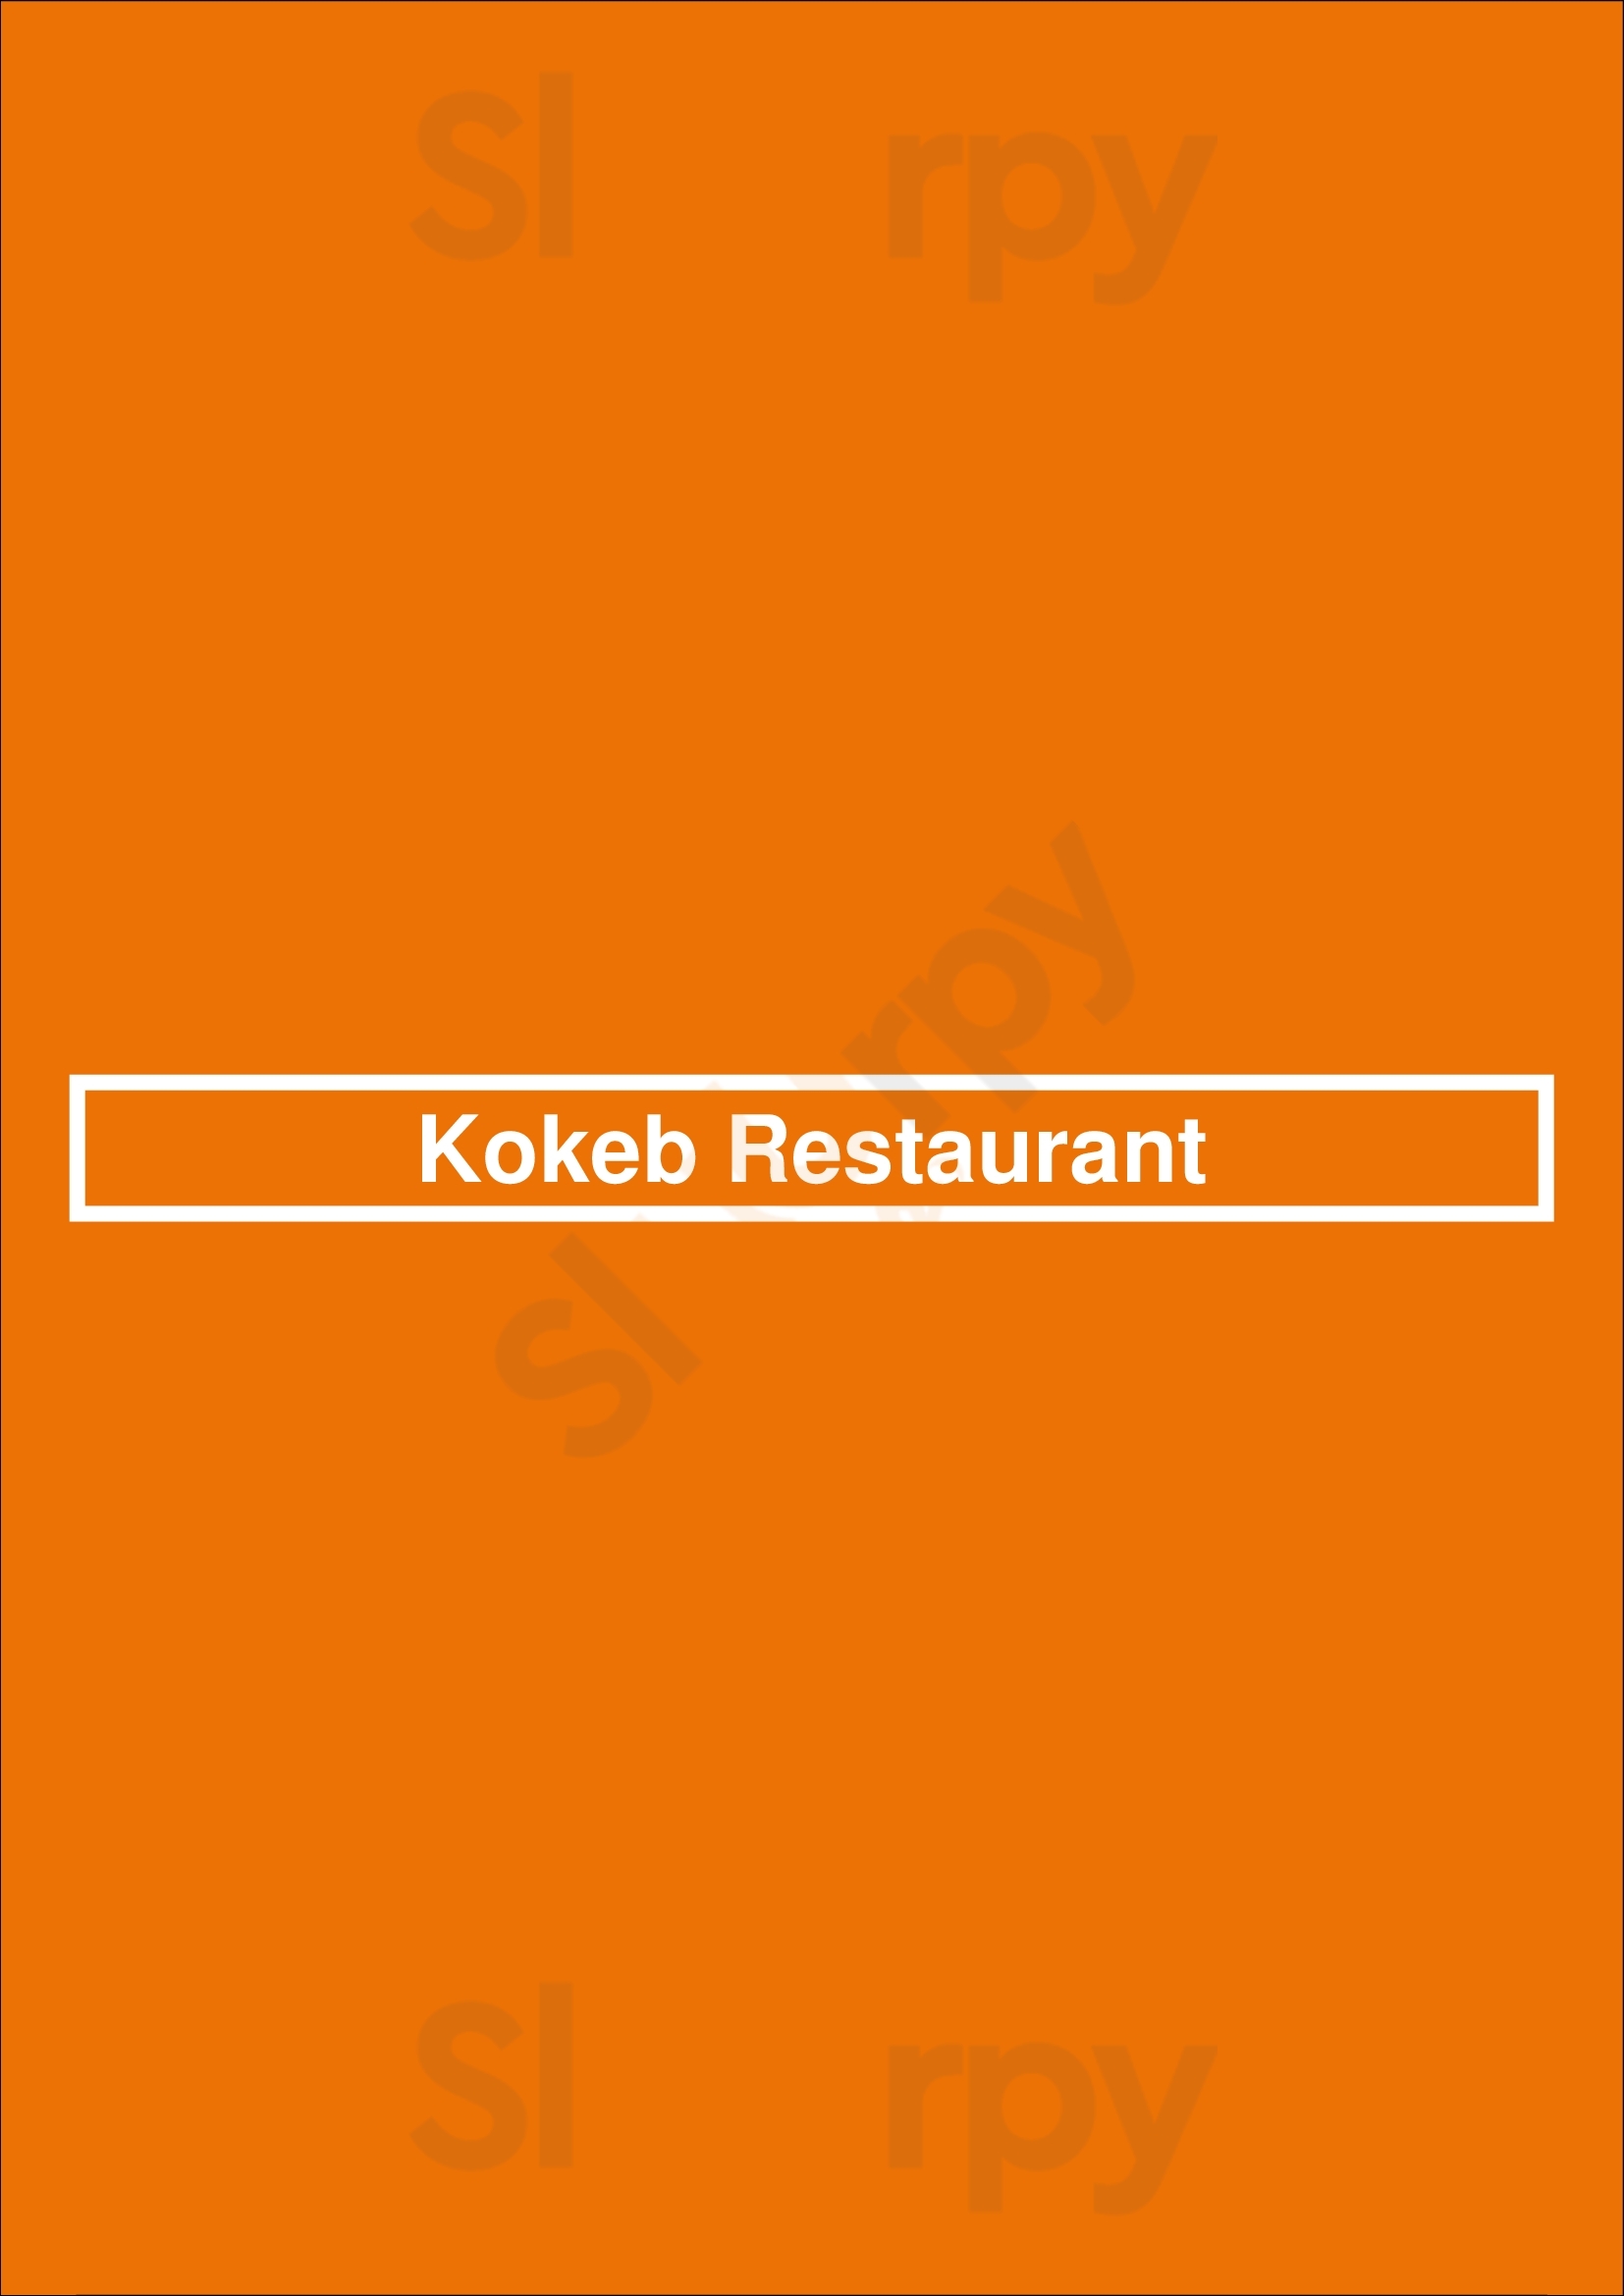 Kokeb Restaurant Winnipeg Menu - 1